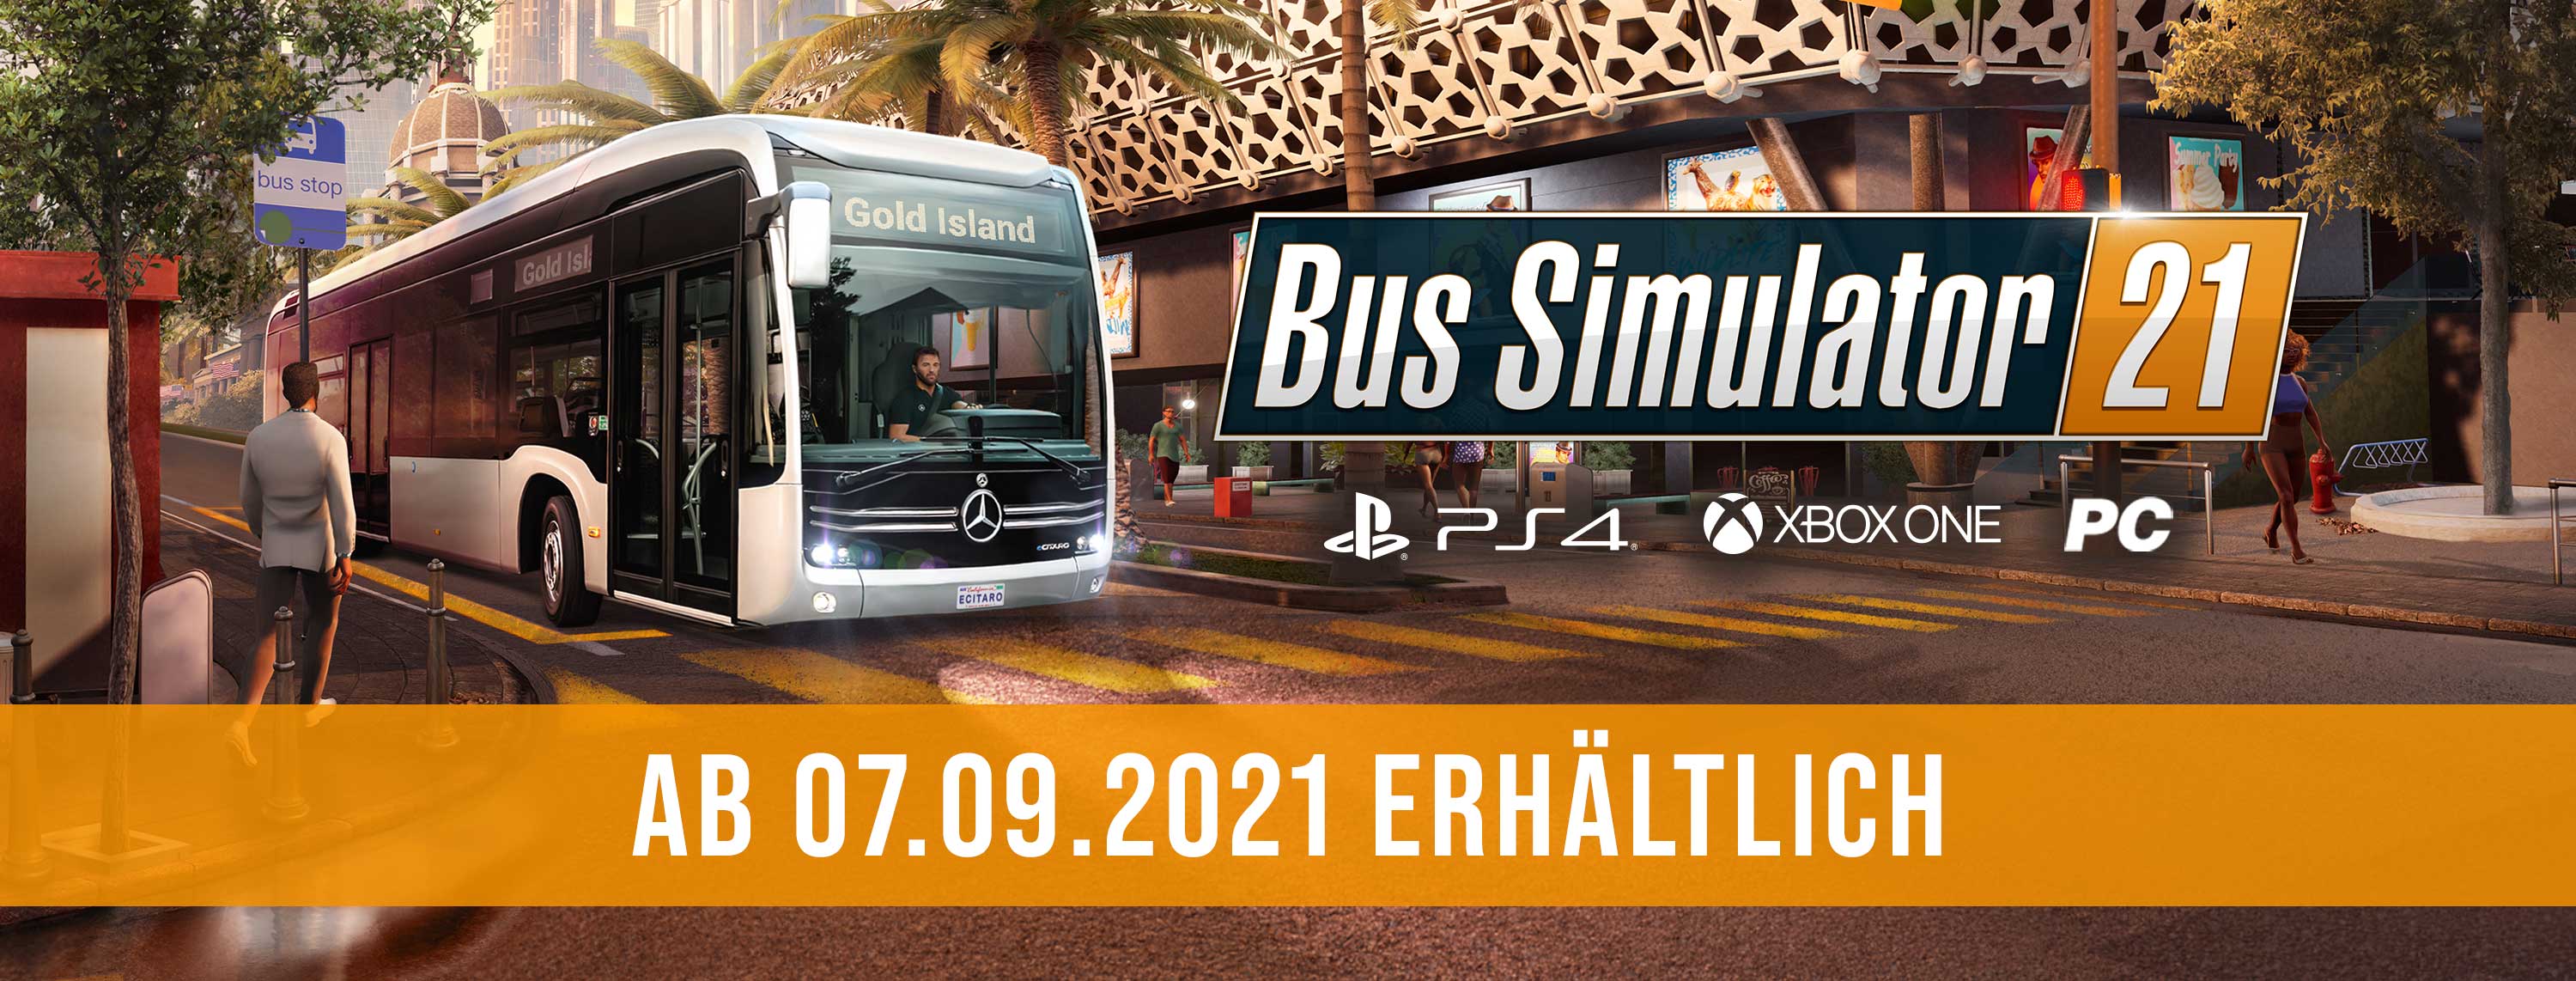 Bus Simulator 21 Release Date